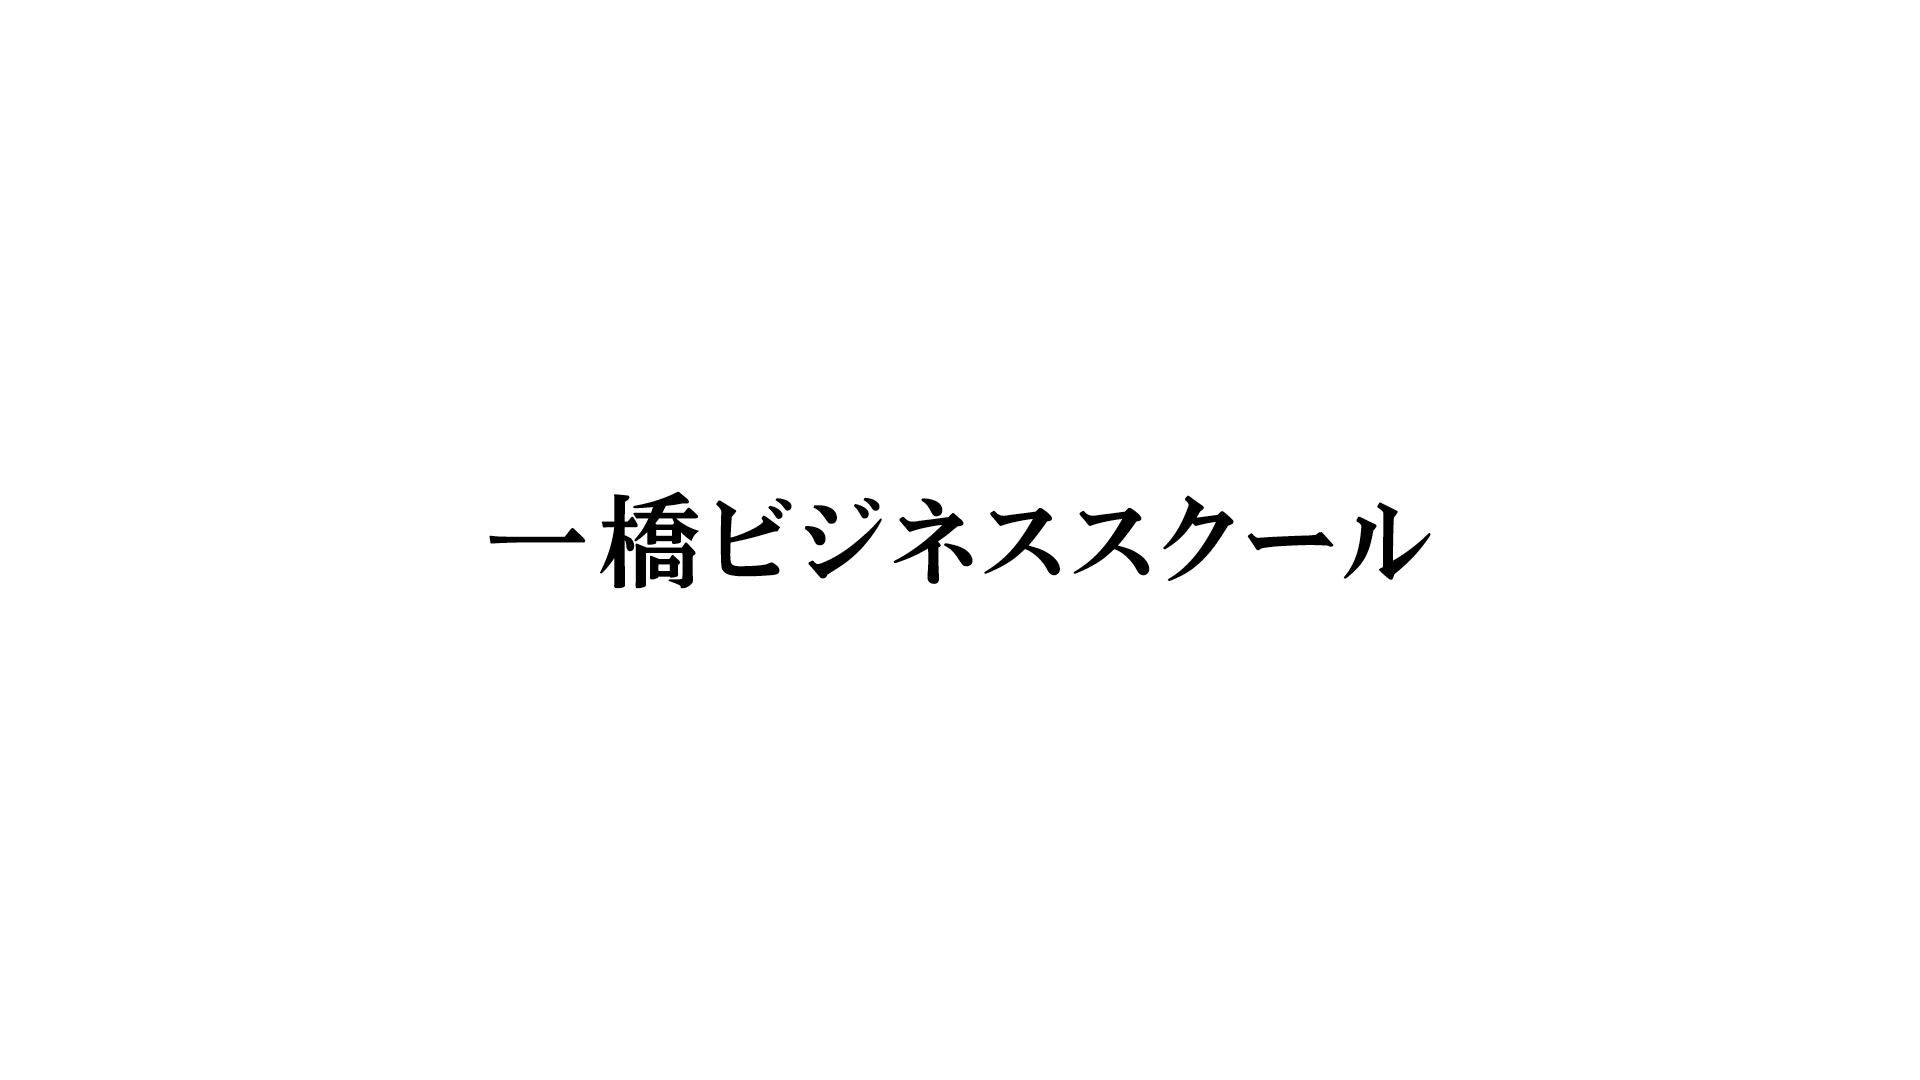 Hitotsubashi Business School Japanese Logotype